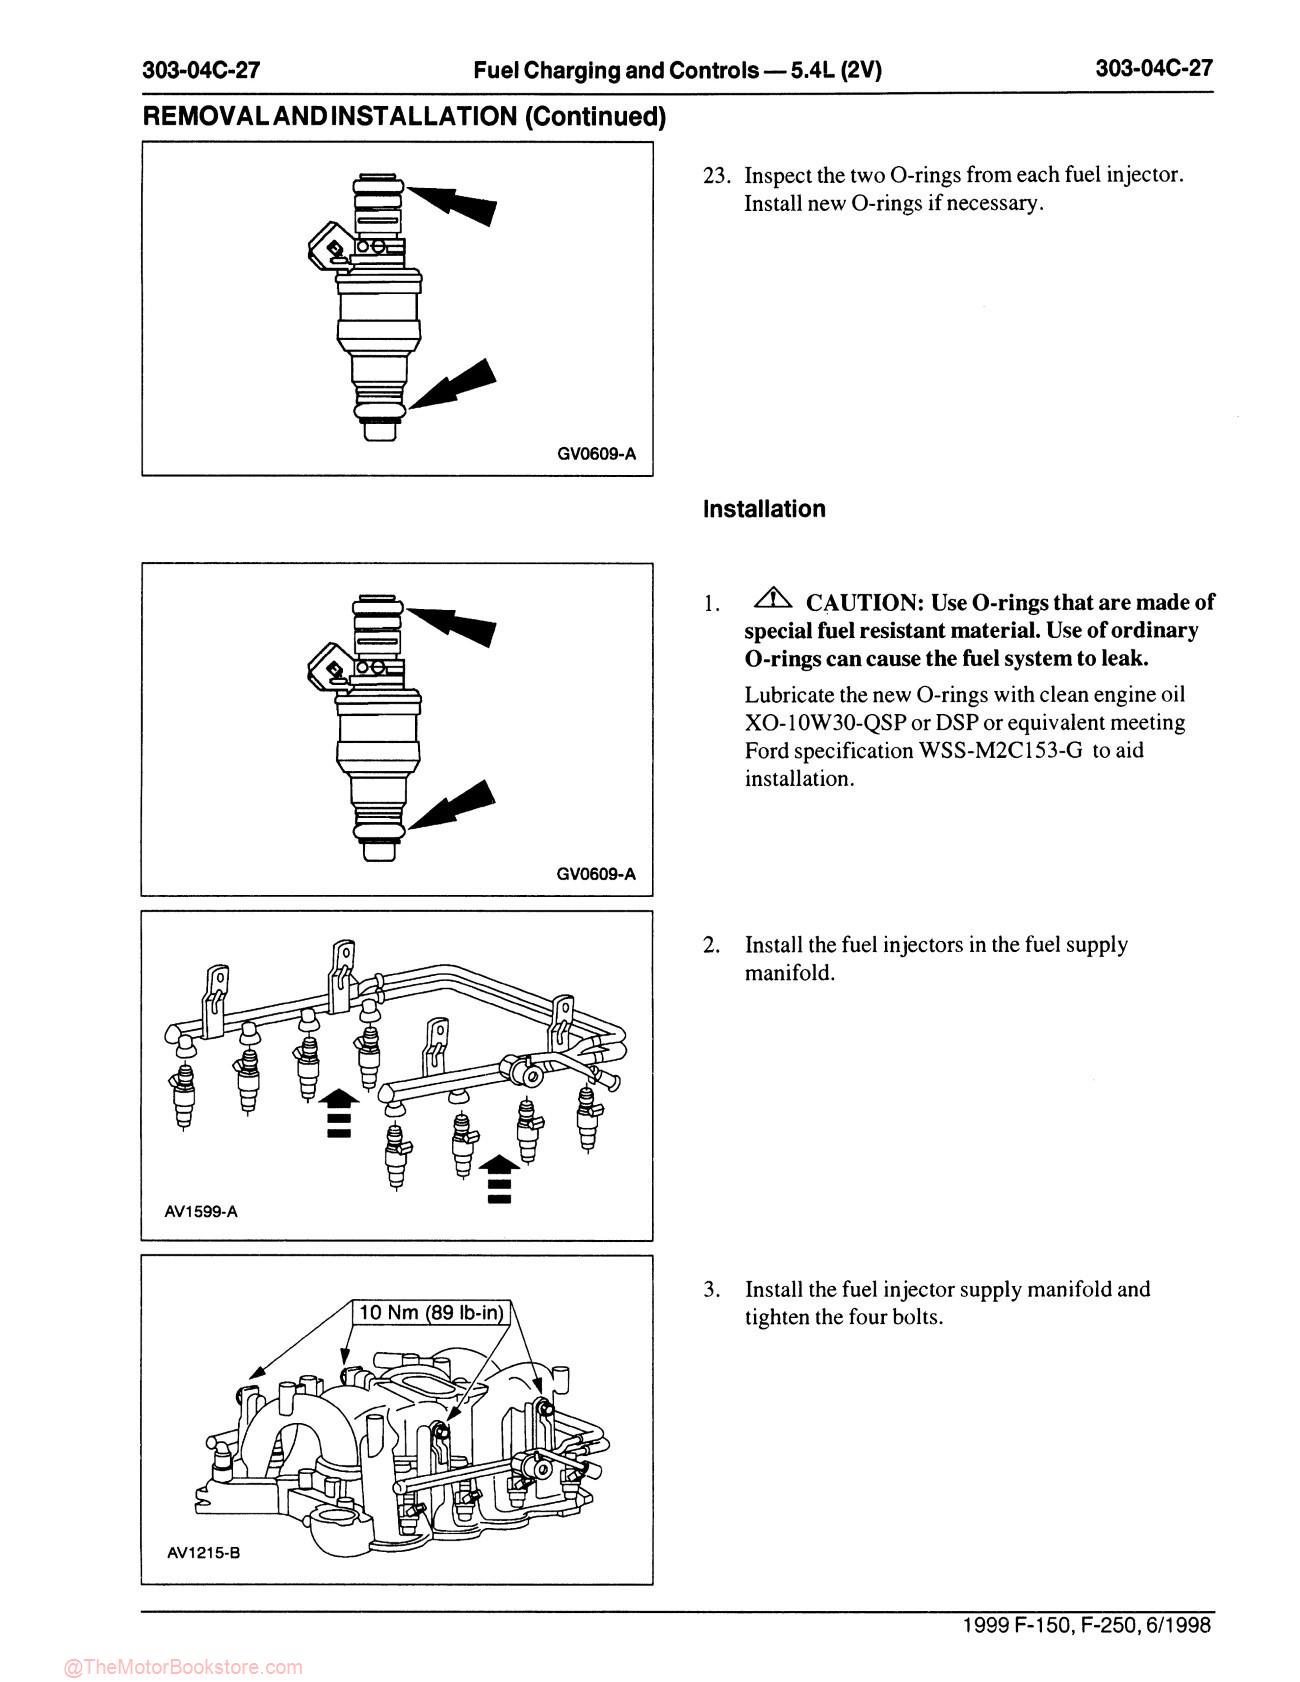 1999 Ford F-150, F-250 Workshop Repair Manual - Sample Page 2